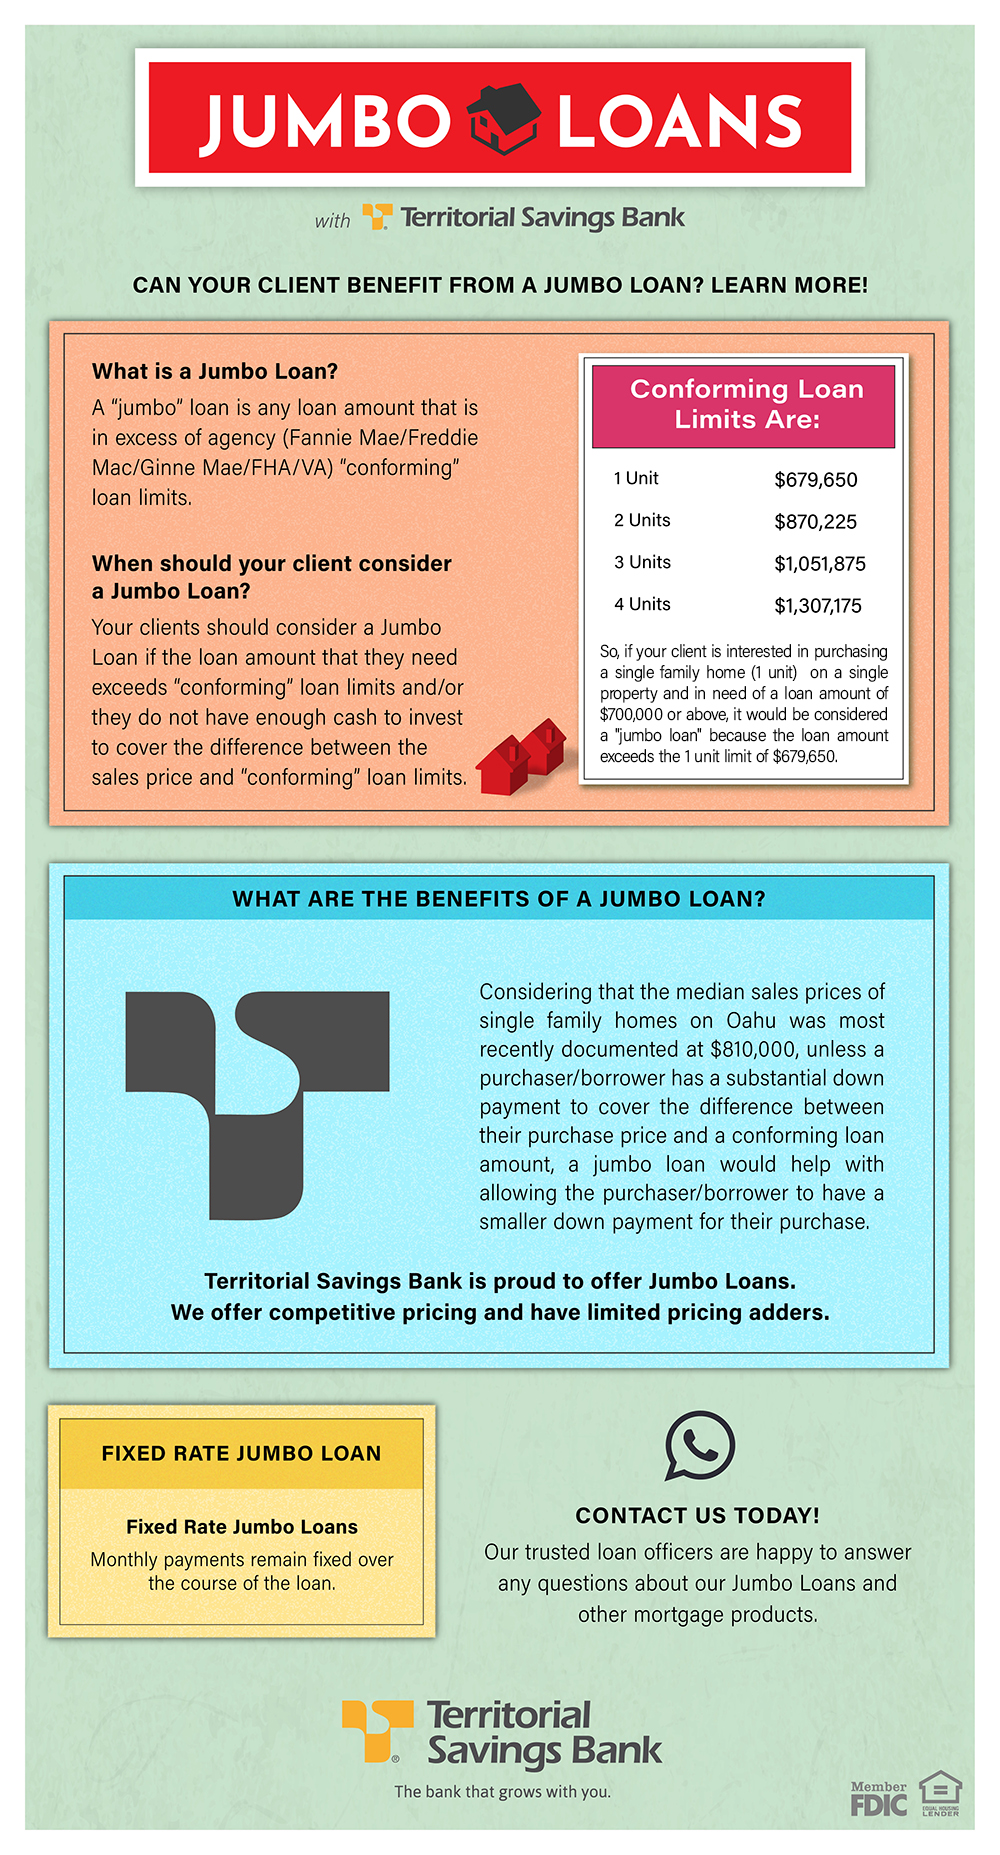 What Is a Jumbo Loan?